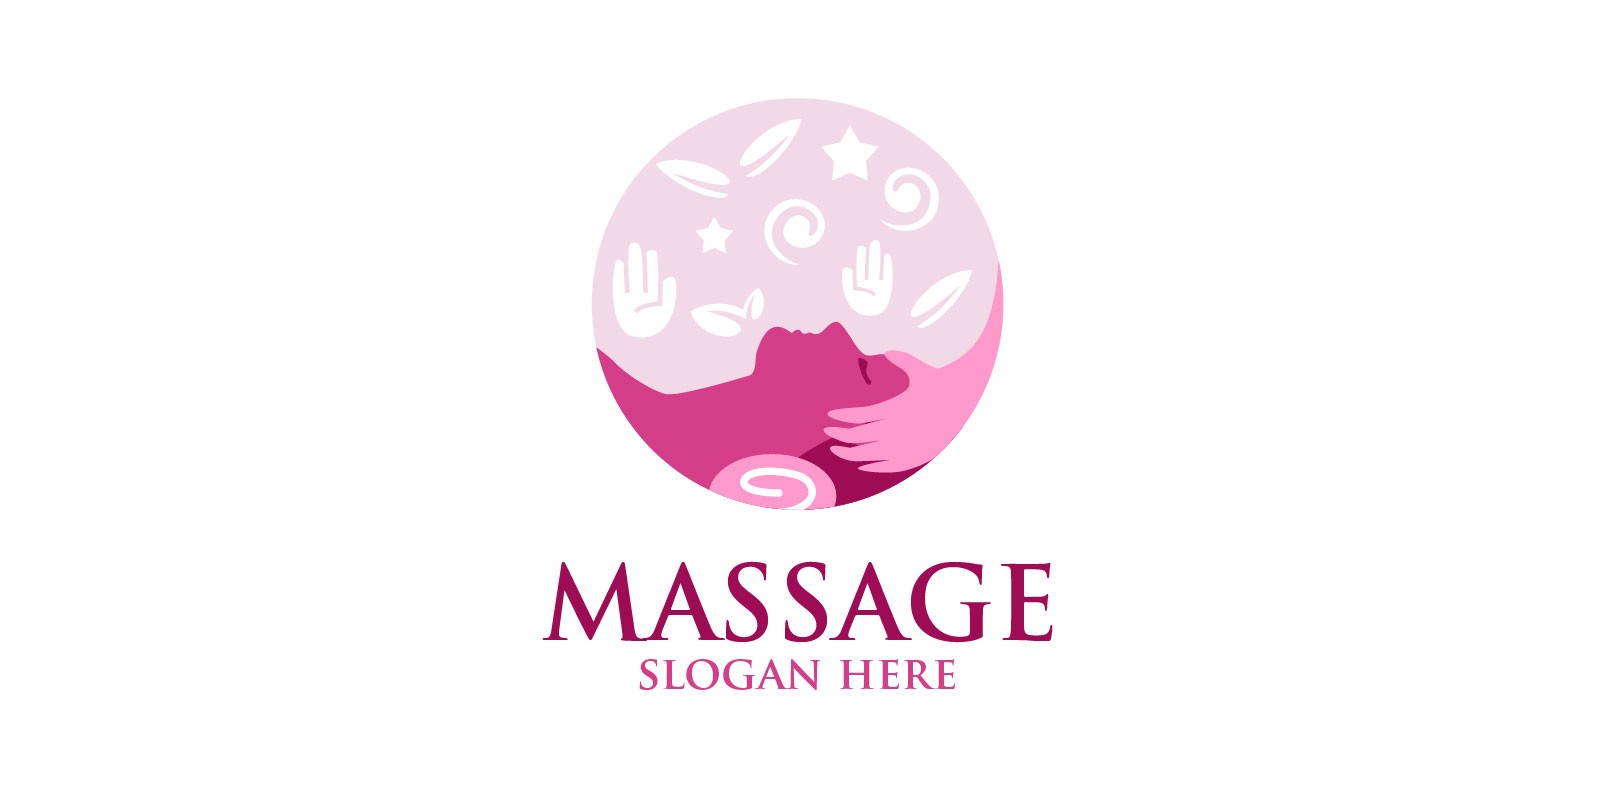 massage logo ideas 3